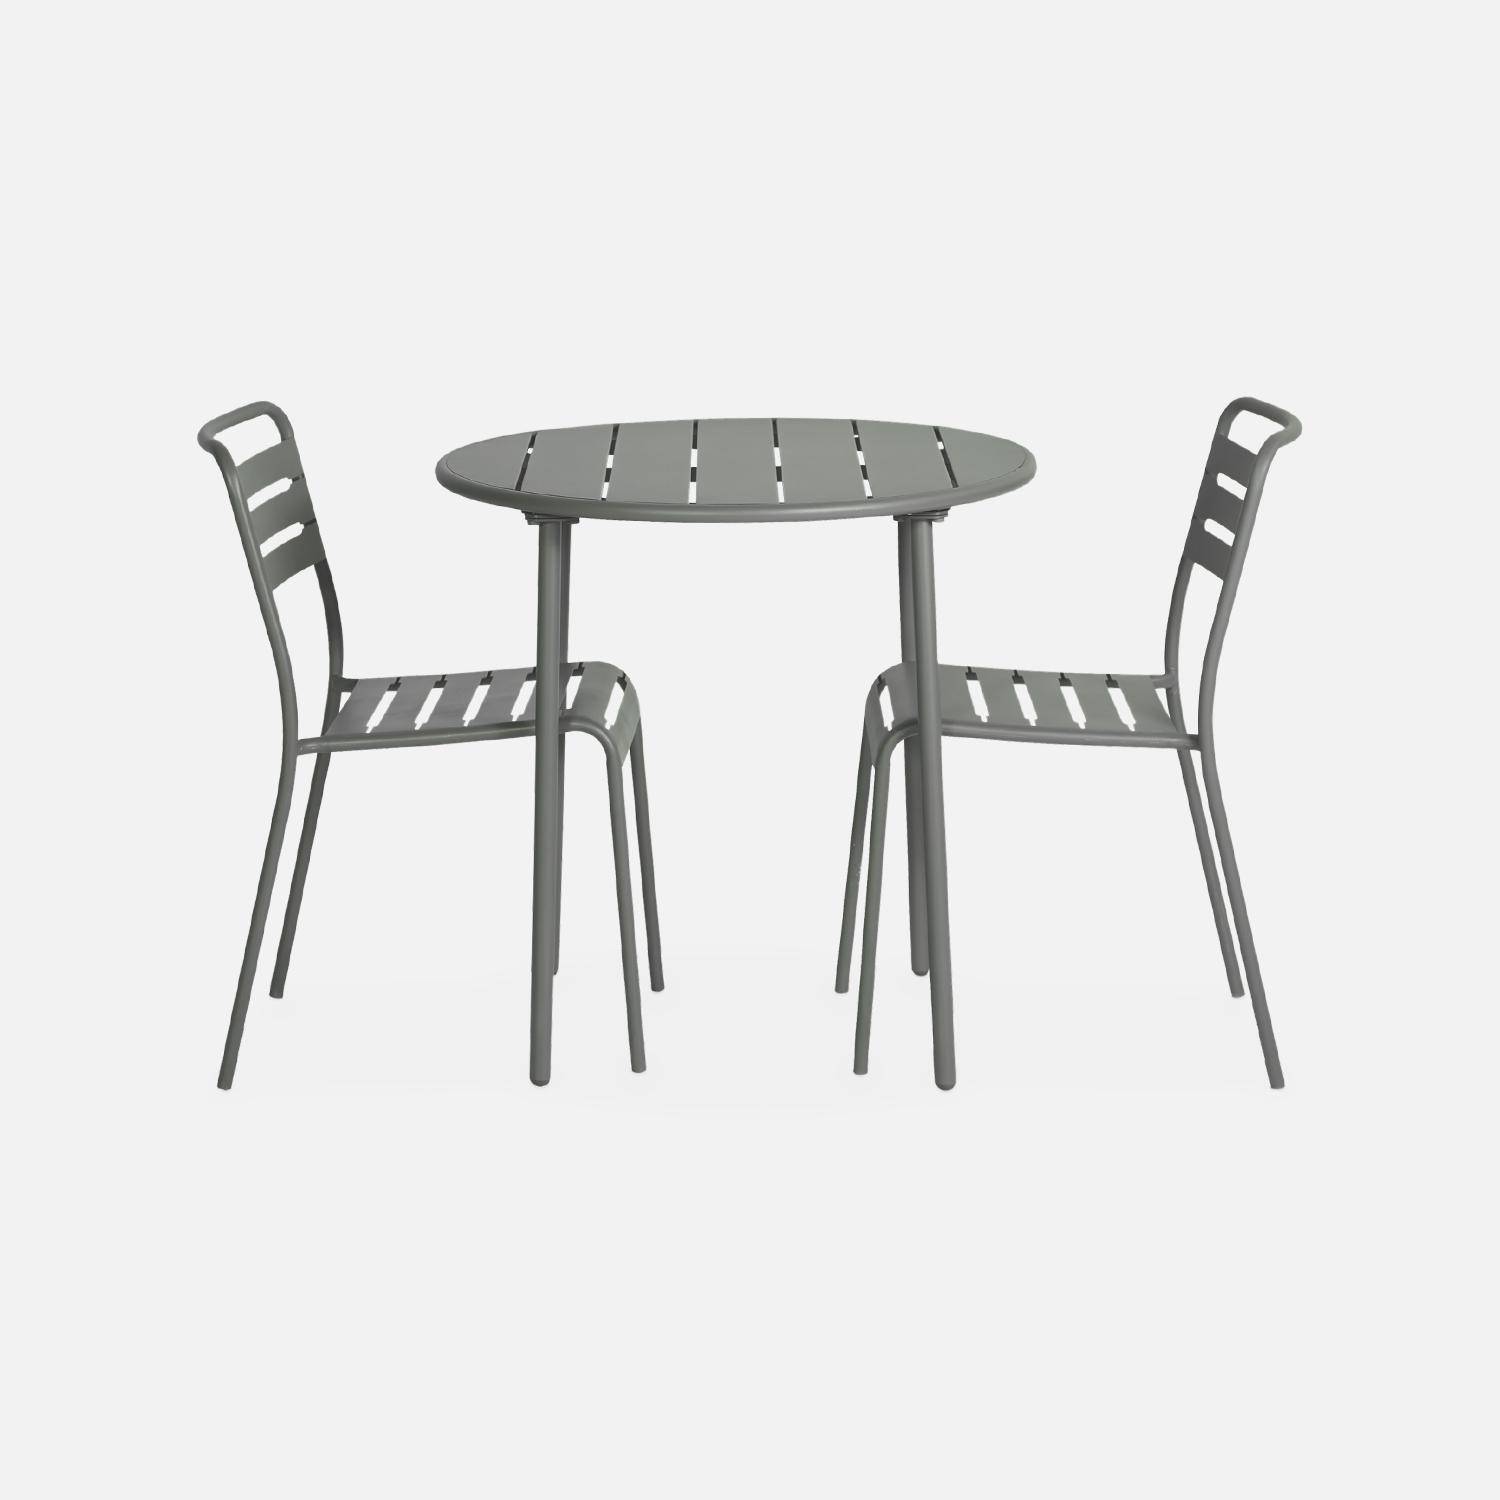 Table de jardin métal savane Amélia avec 2 chaises, traitement antirouille,sweeek,Photo4